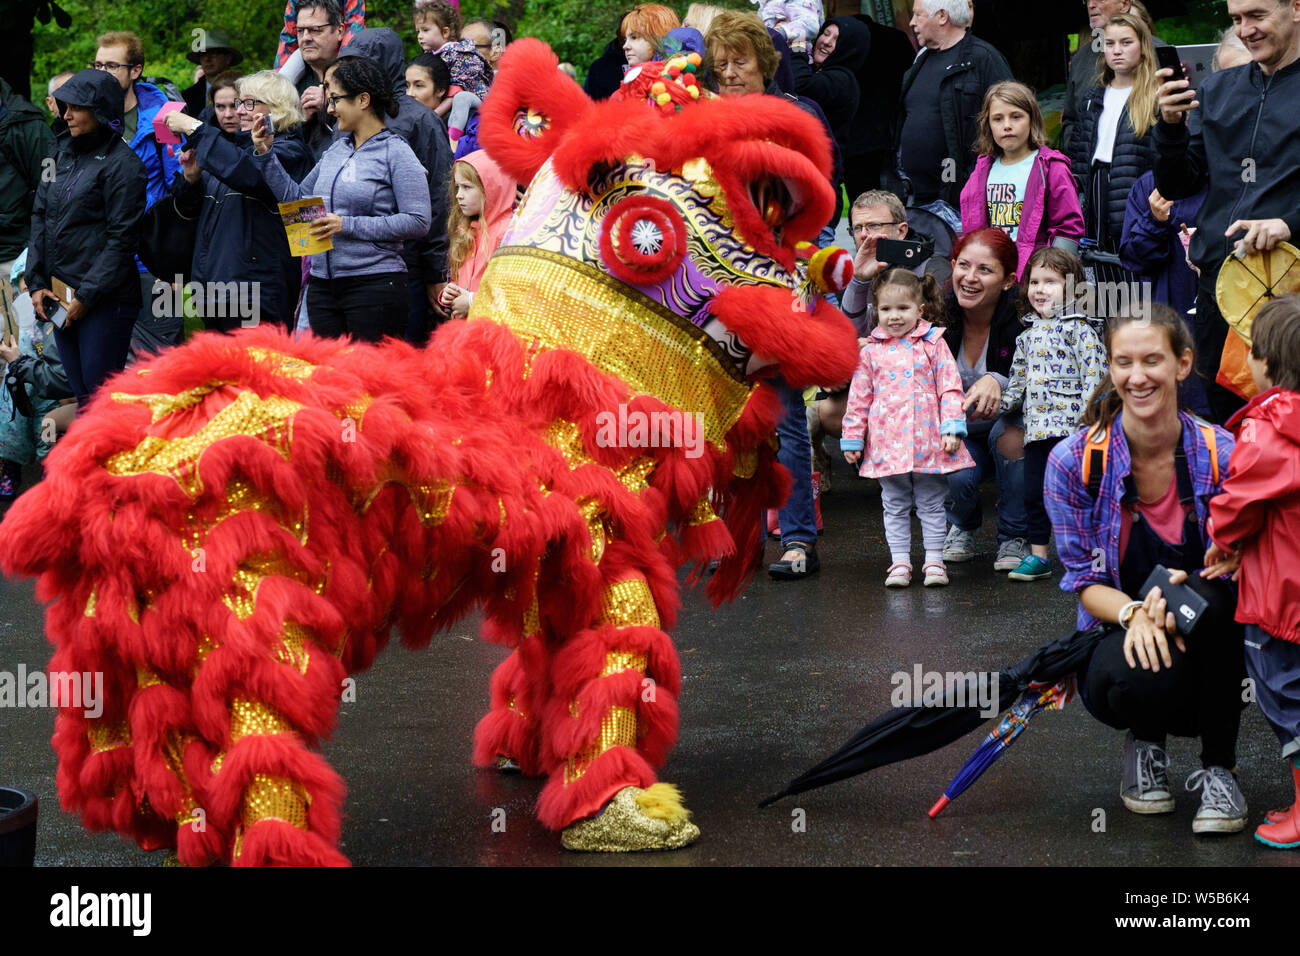 Dragon chinois rouge devant une foule de personnes au Valley Gardens Carnival, Valley Gardens, Harrogate, North Yorkshire, Angleterre, ROYAUME-UNI Banque D'Images